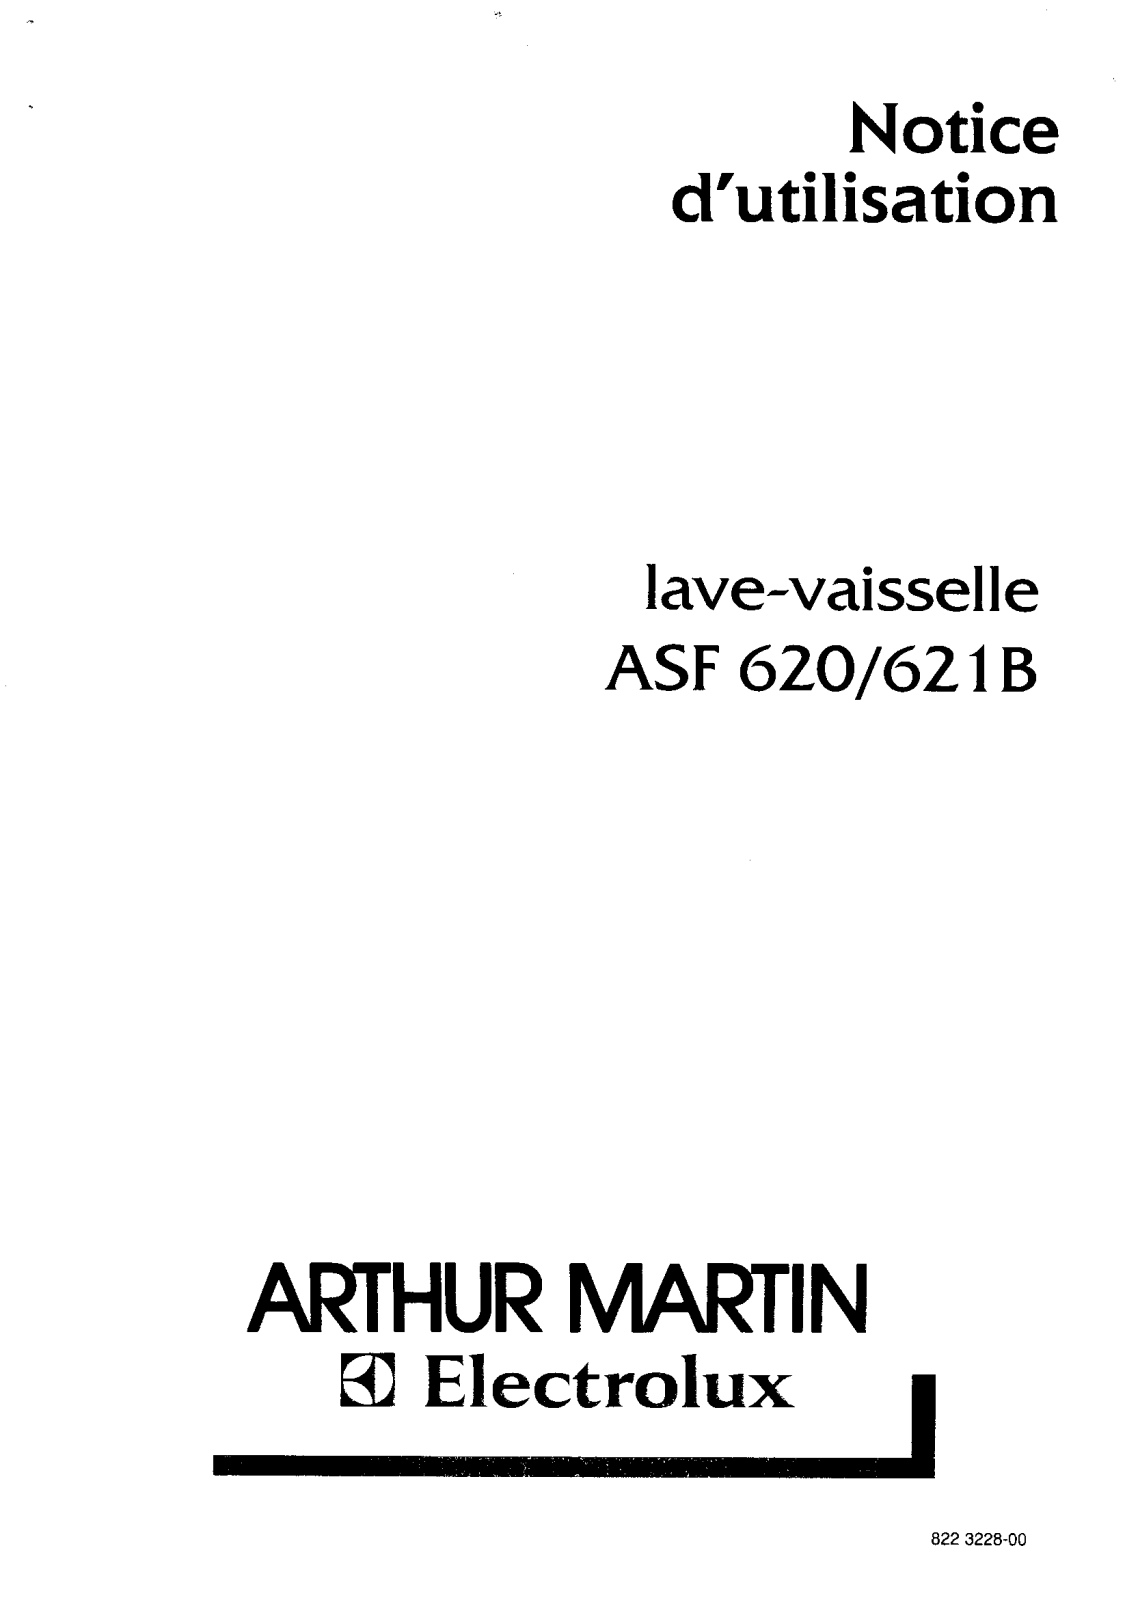 Arthur martin ASF621B, ASF620 User Manual